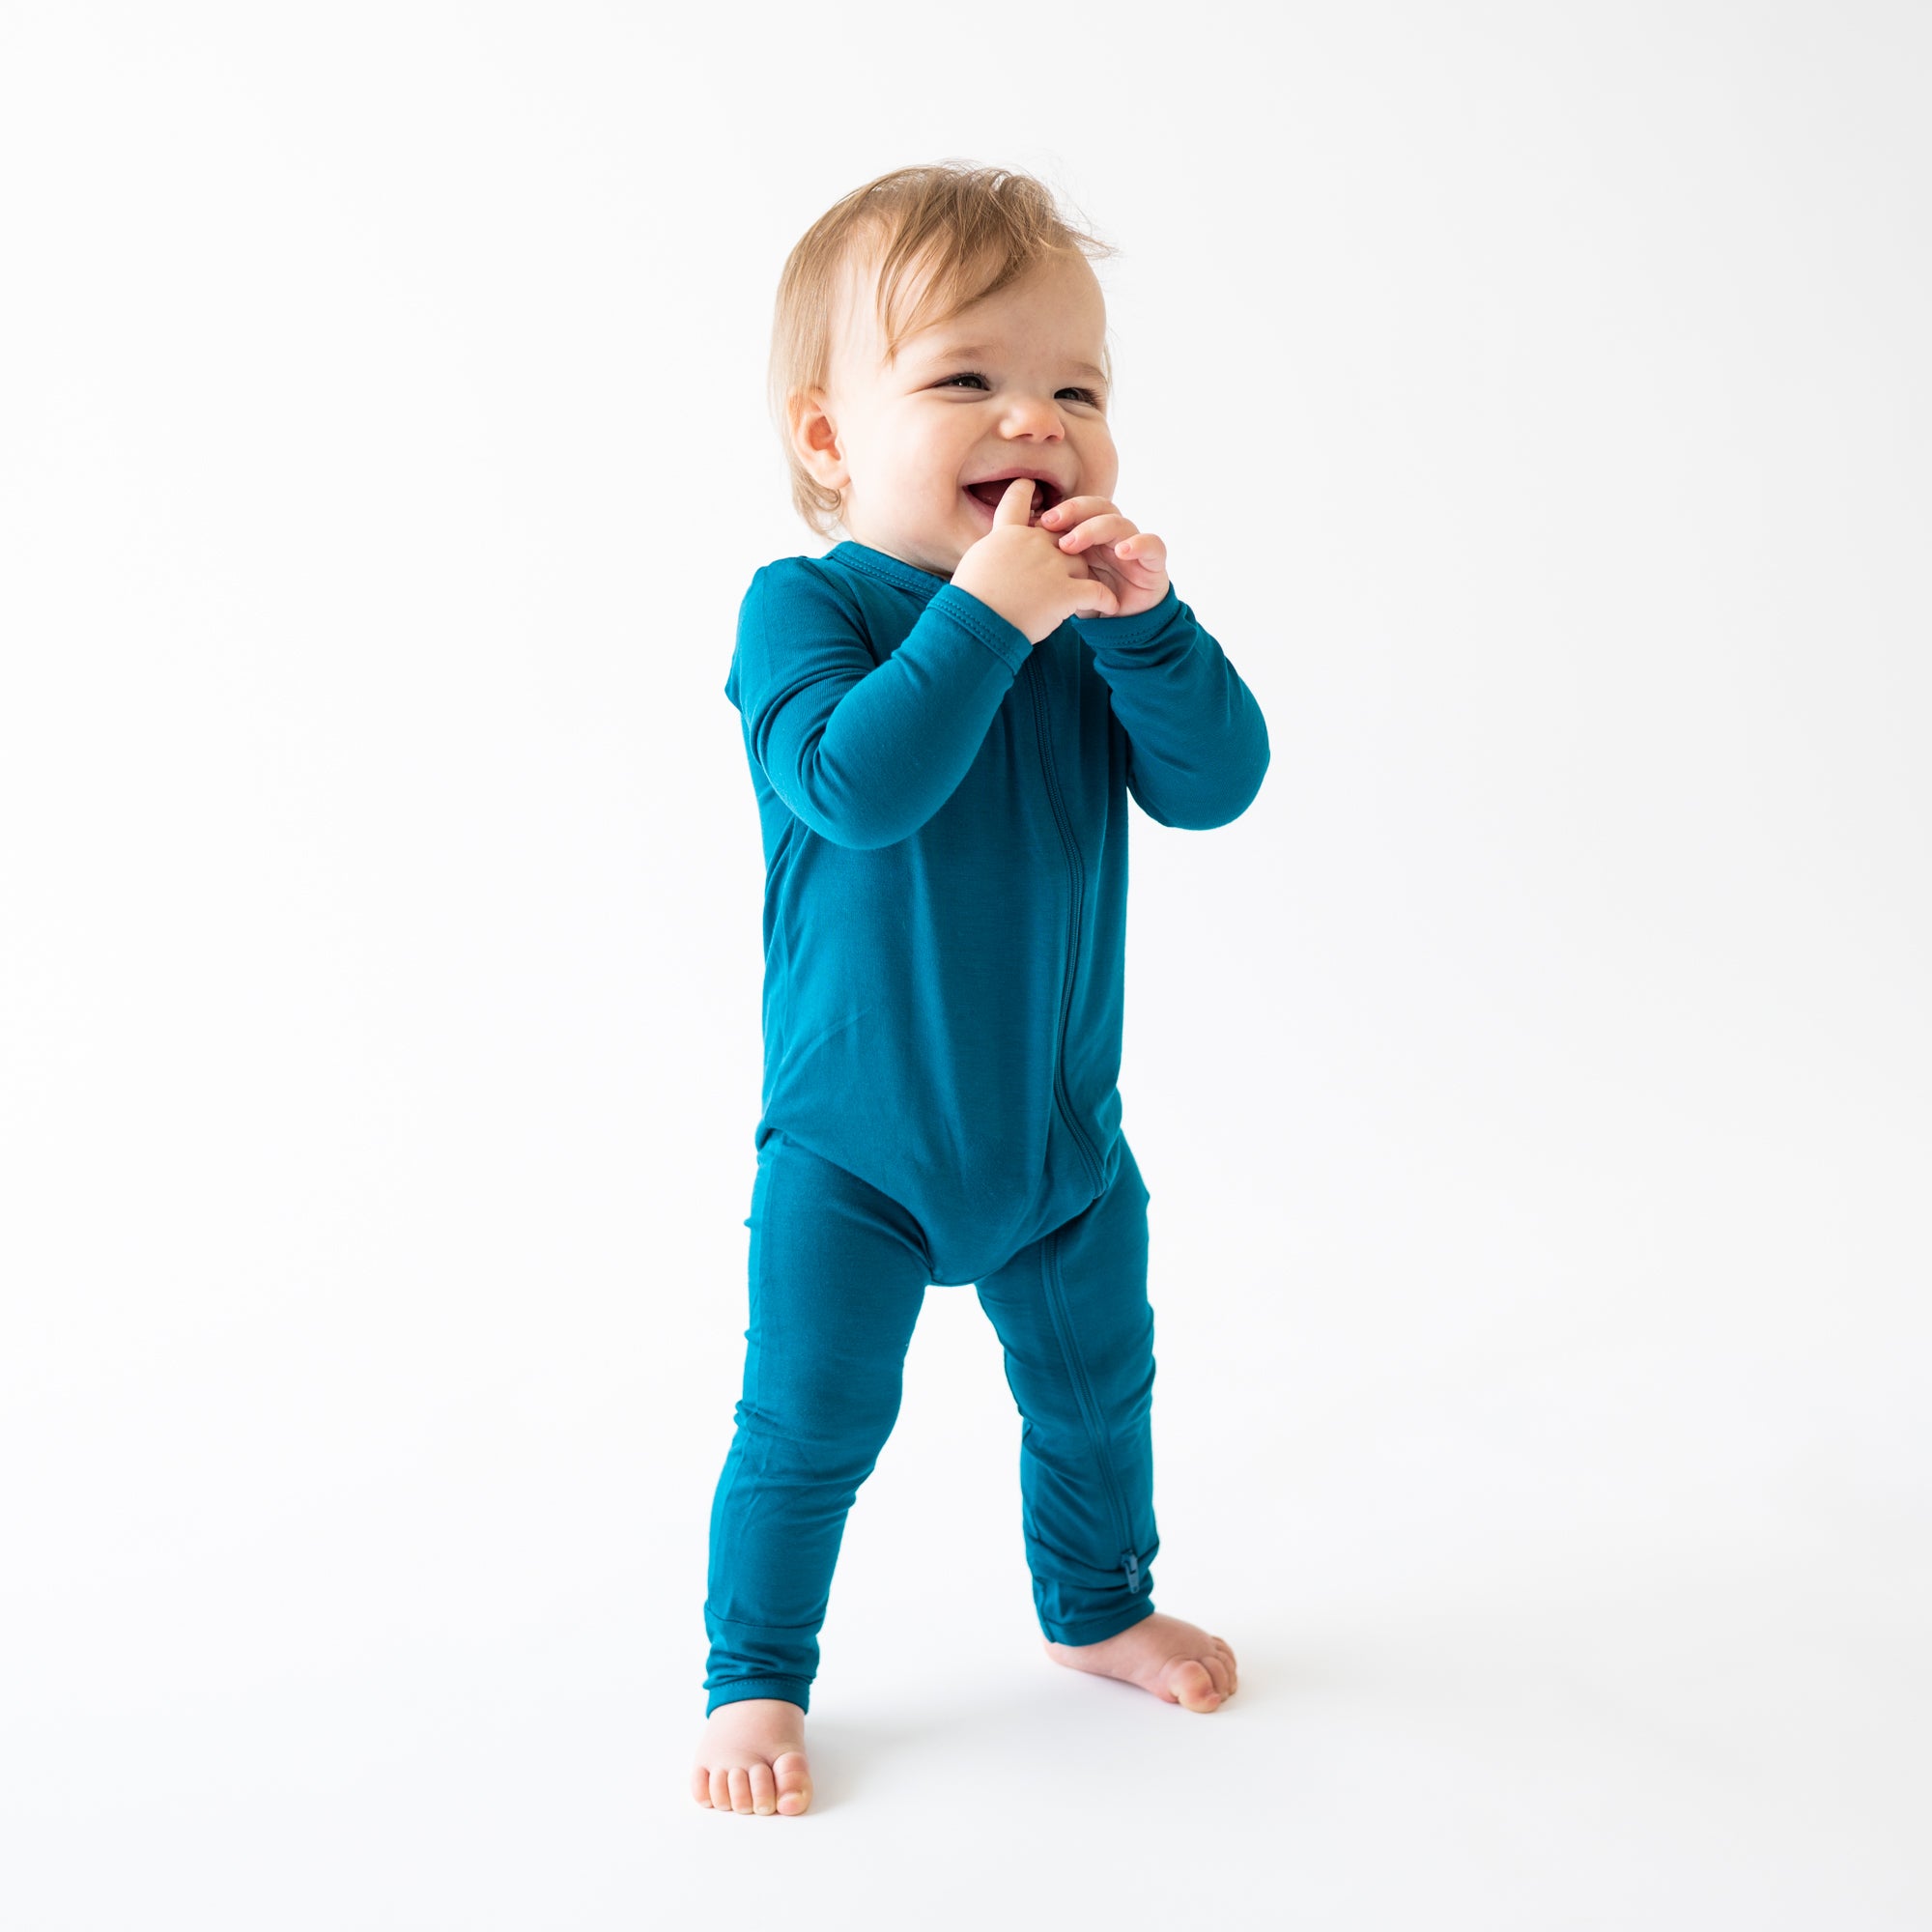 Toddler Wearing Baltic Zipper Romper